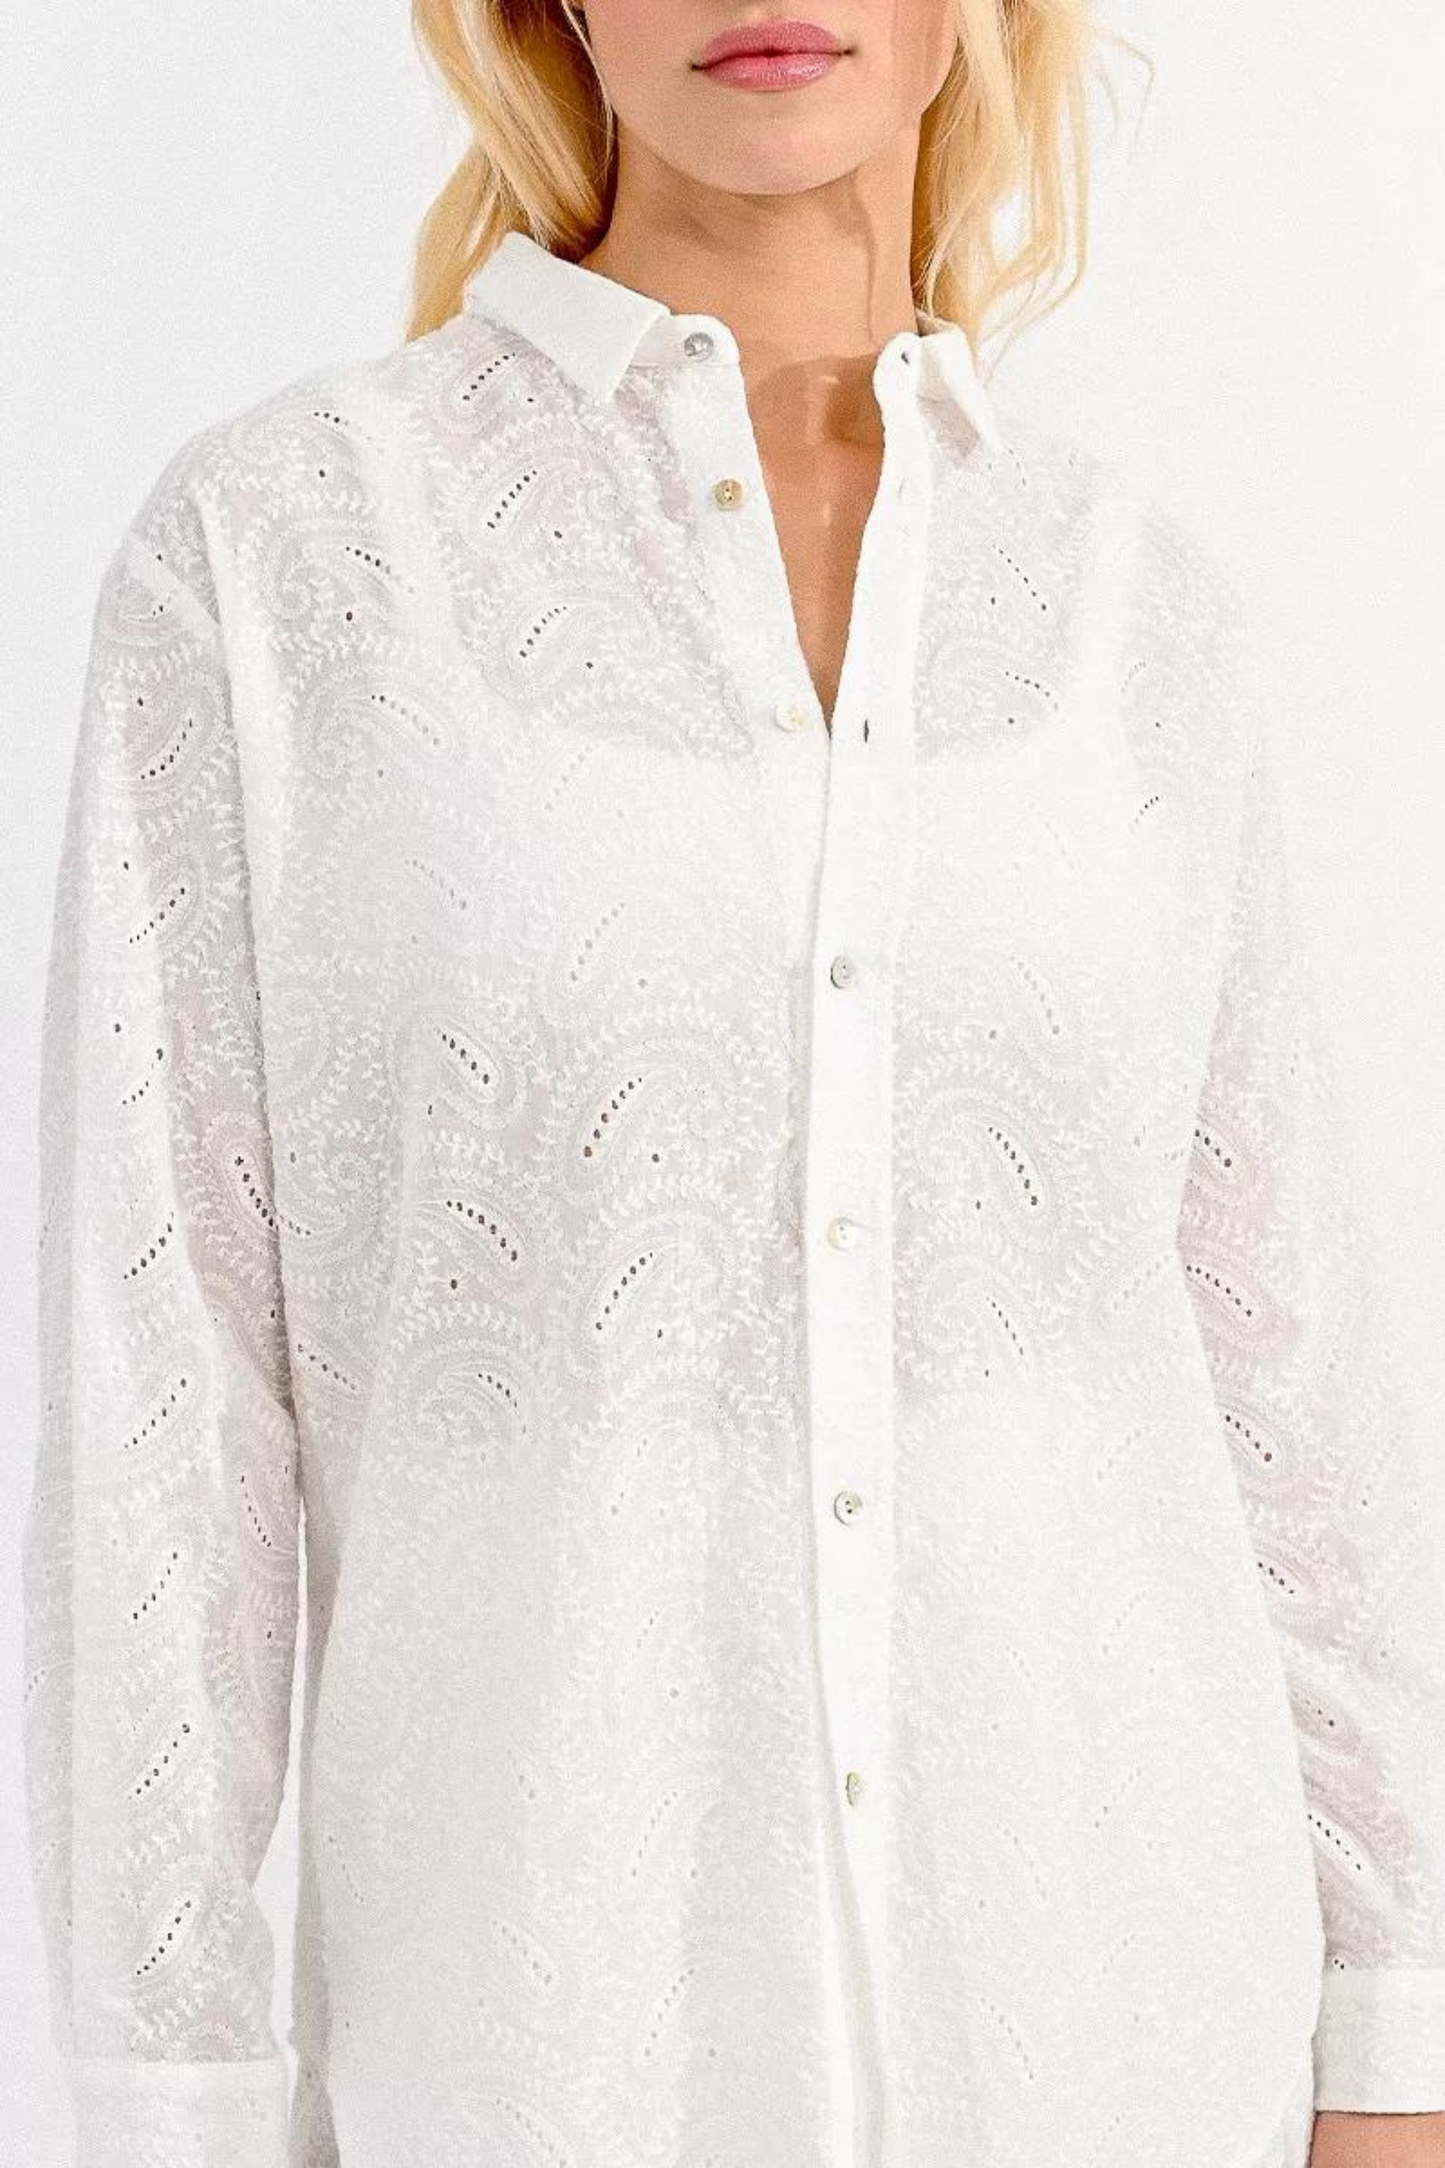 Molly Bracken - Embroidered White Shirt